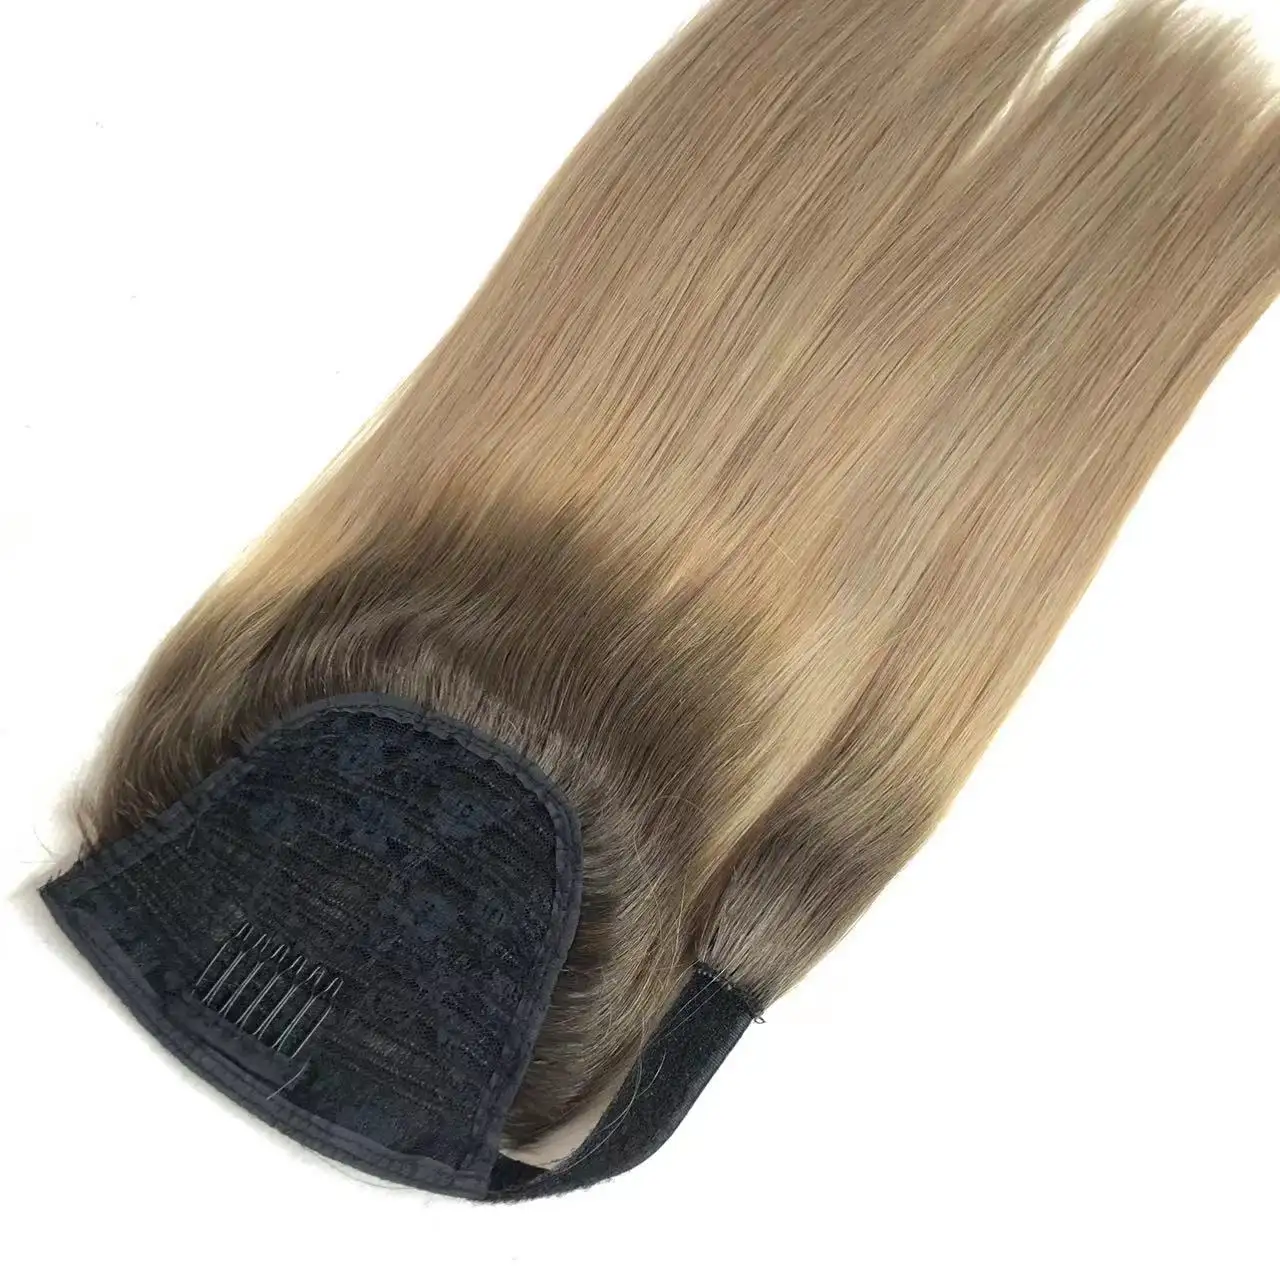 सर्वश्रेष्ठ गुणवत्ता वाले प्राकृतिक मानव बाल पोनीटेल क्लिप बालों के साथ बालों के विस्तार कच्चे कुंवारी रूसी बालों को अनुकूलित रंग ड्रॉस्ट्रिंग पोनीटेल